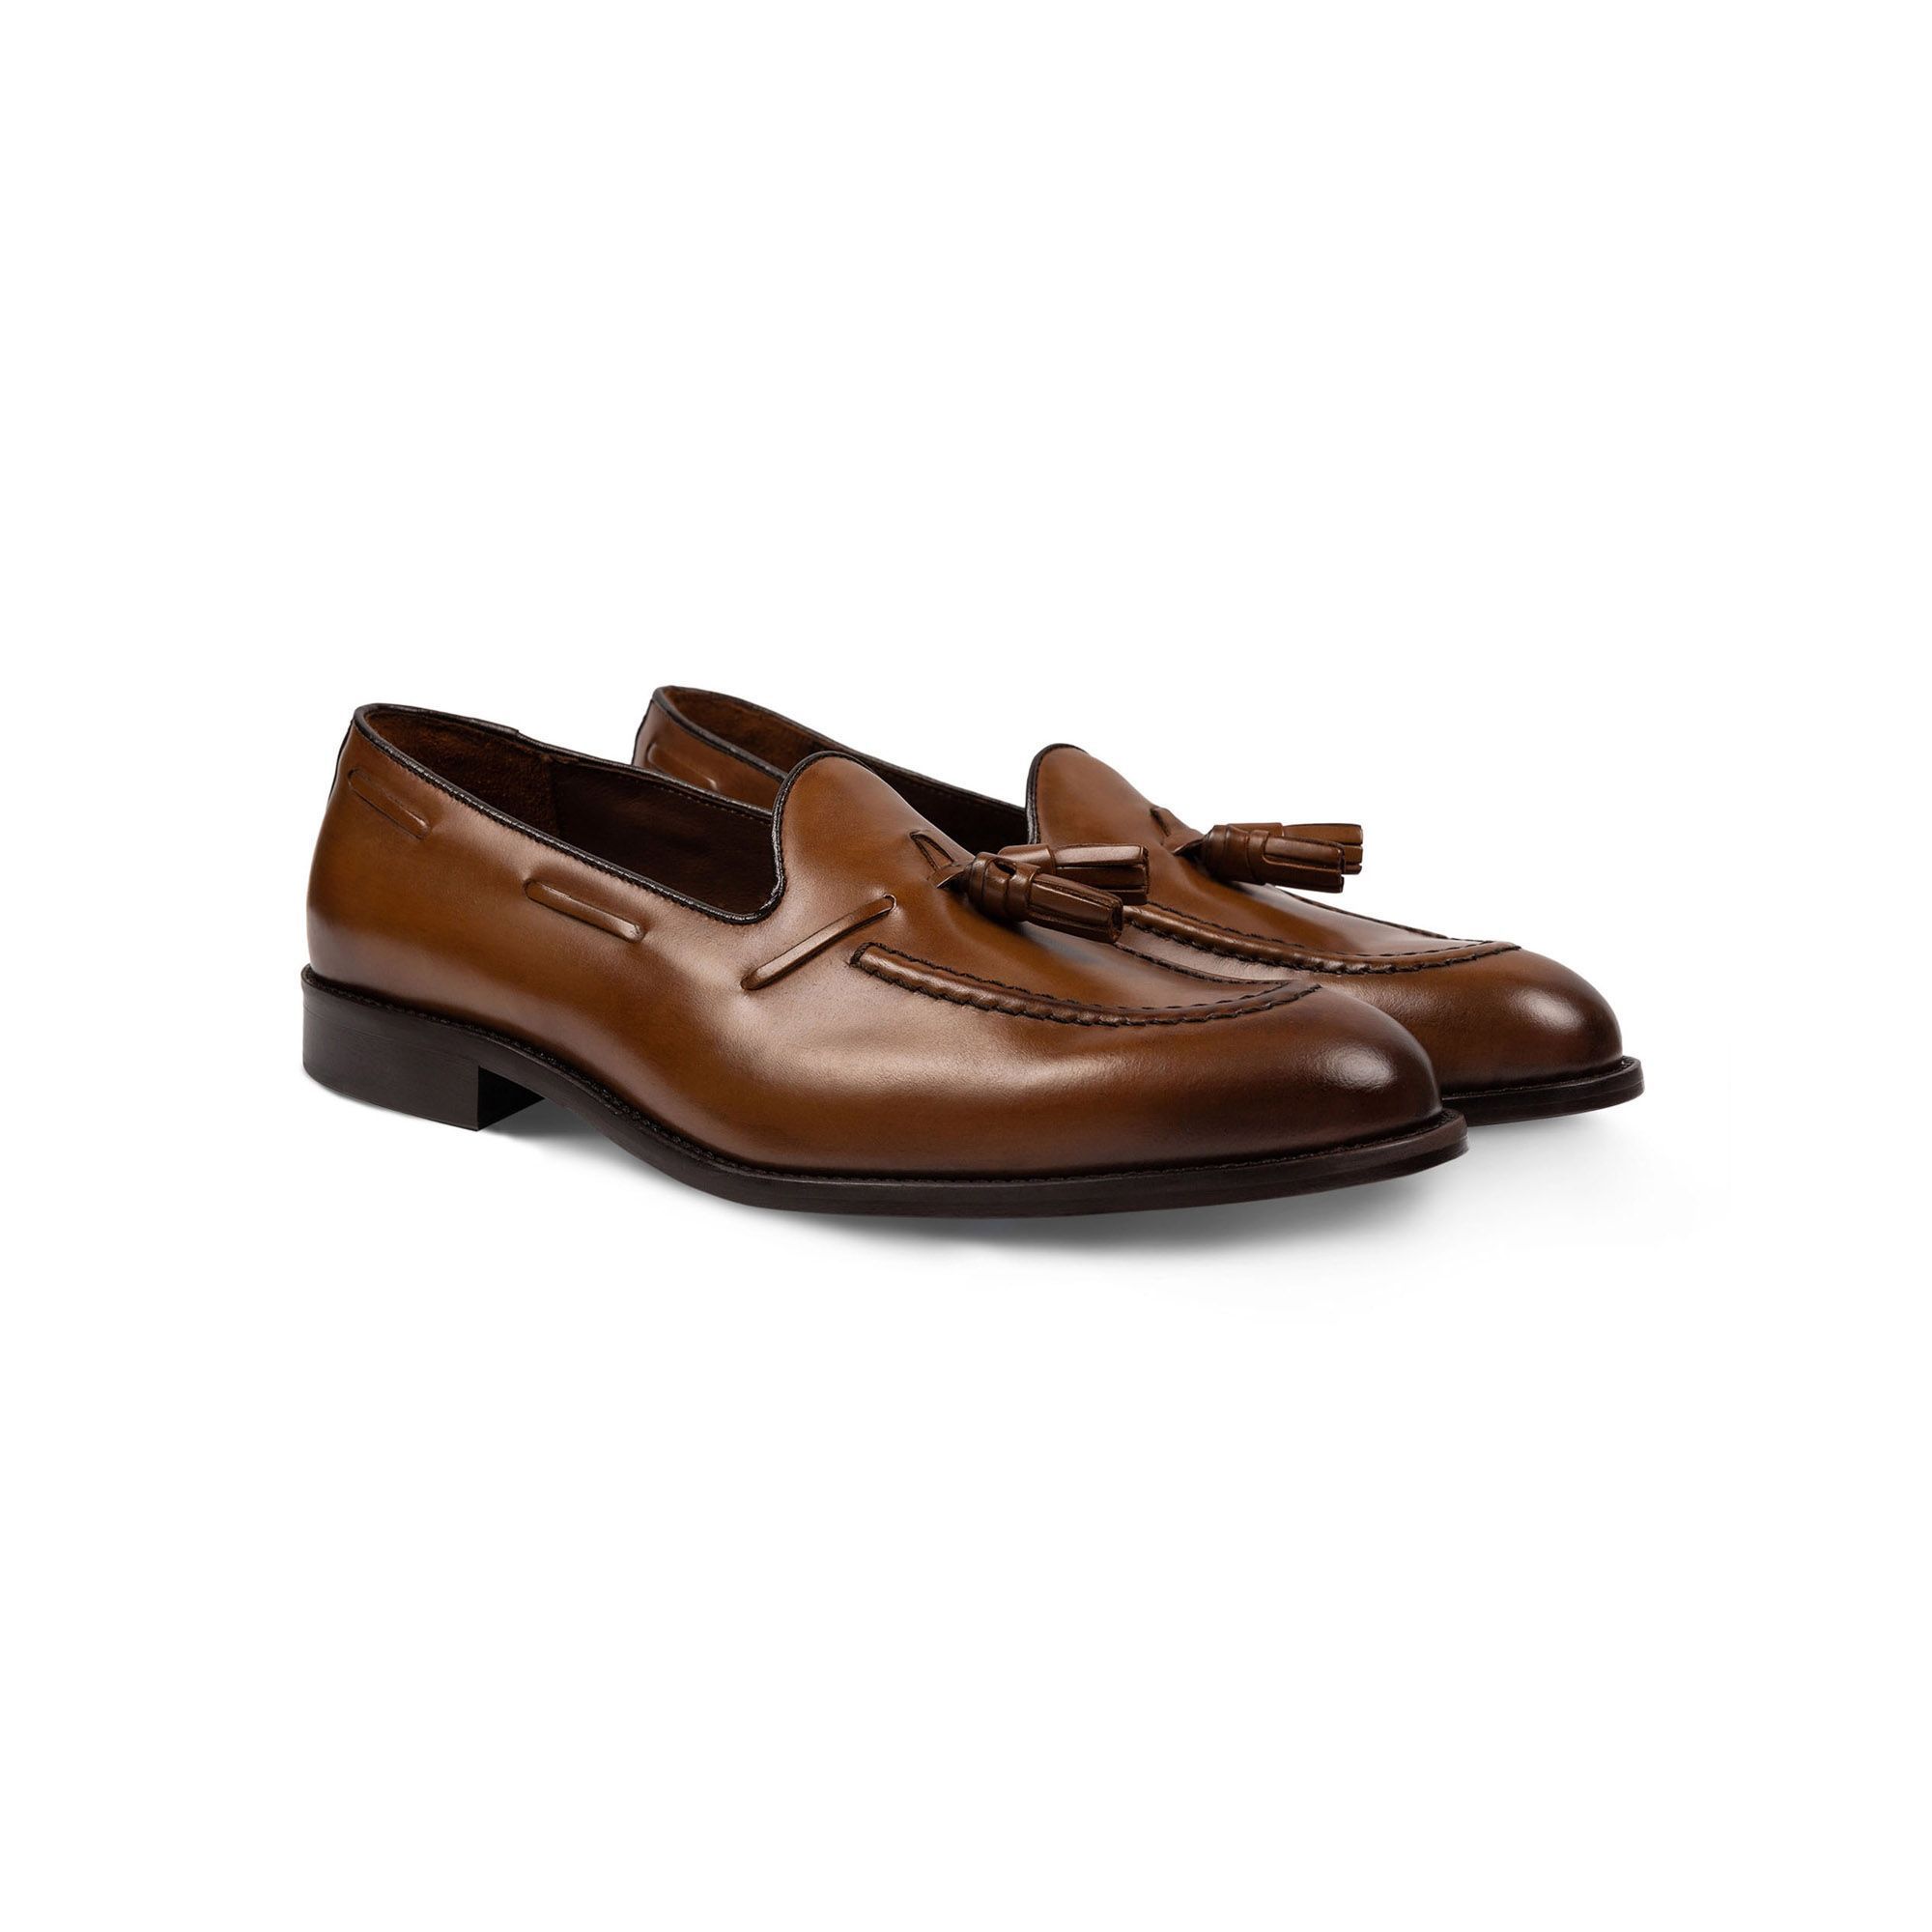 Men's chestnut brown tassel loafers